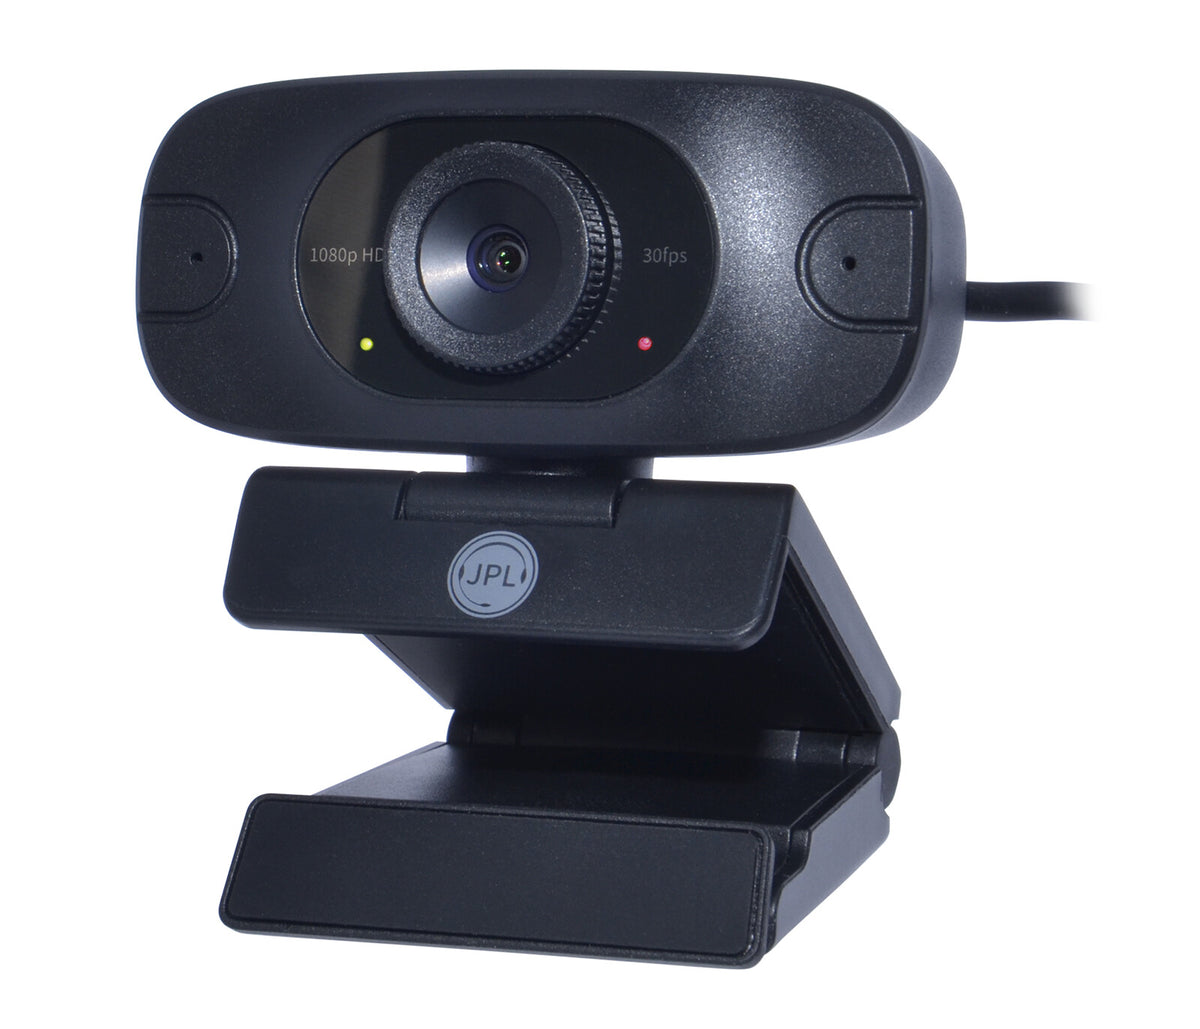 JPL Vision Mini - 2 MP 1940 x 1080 pixels USB 2.0 webcam